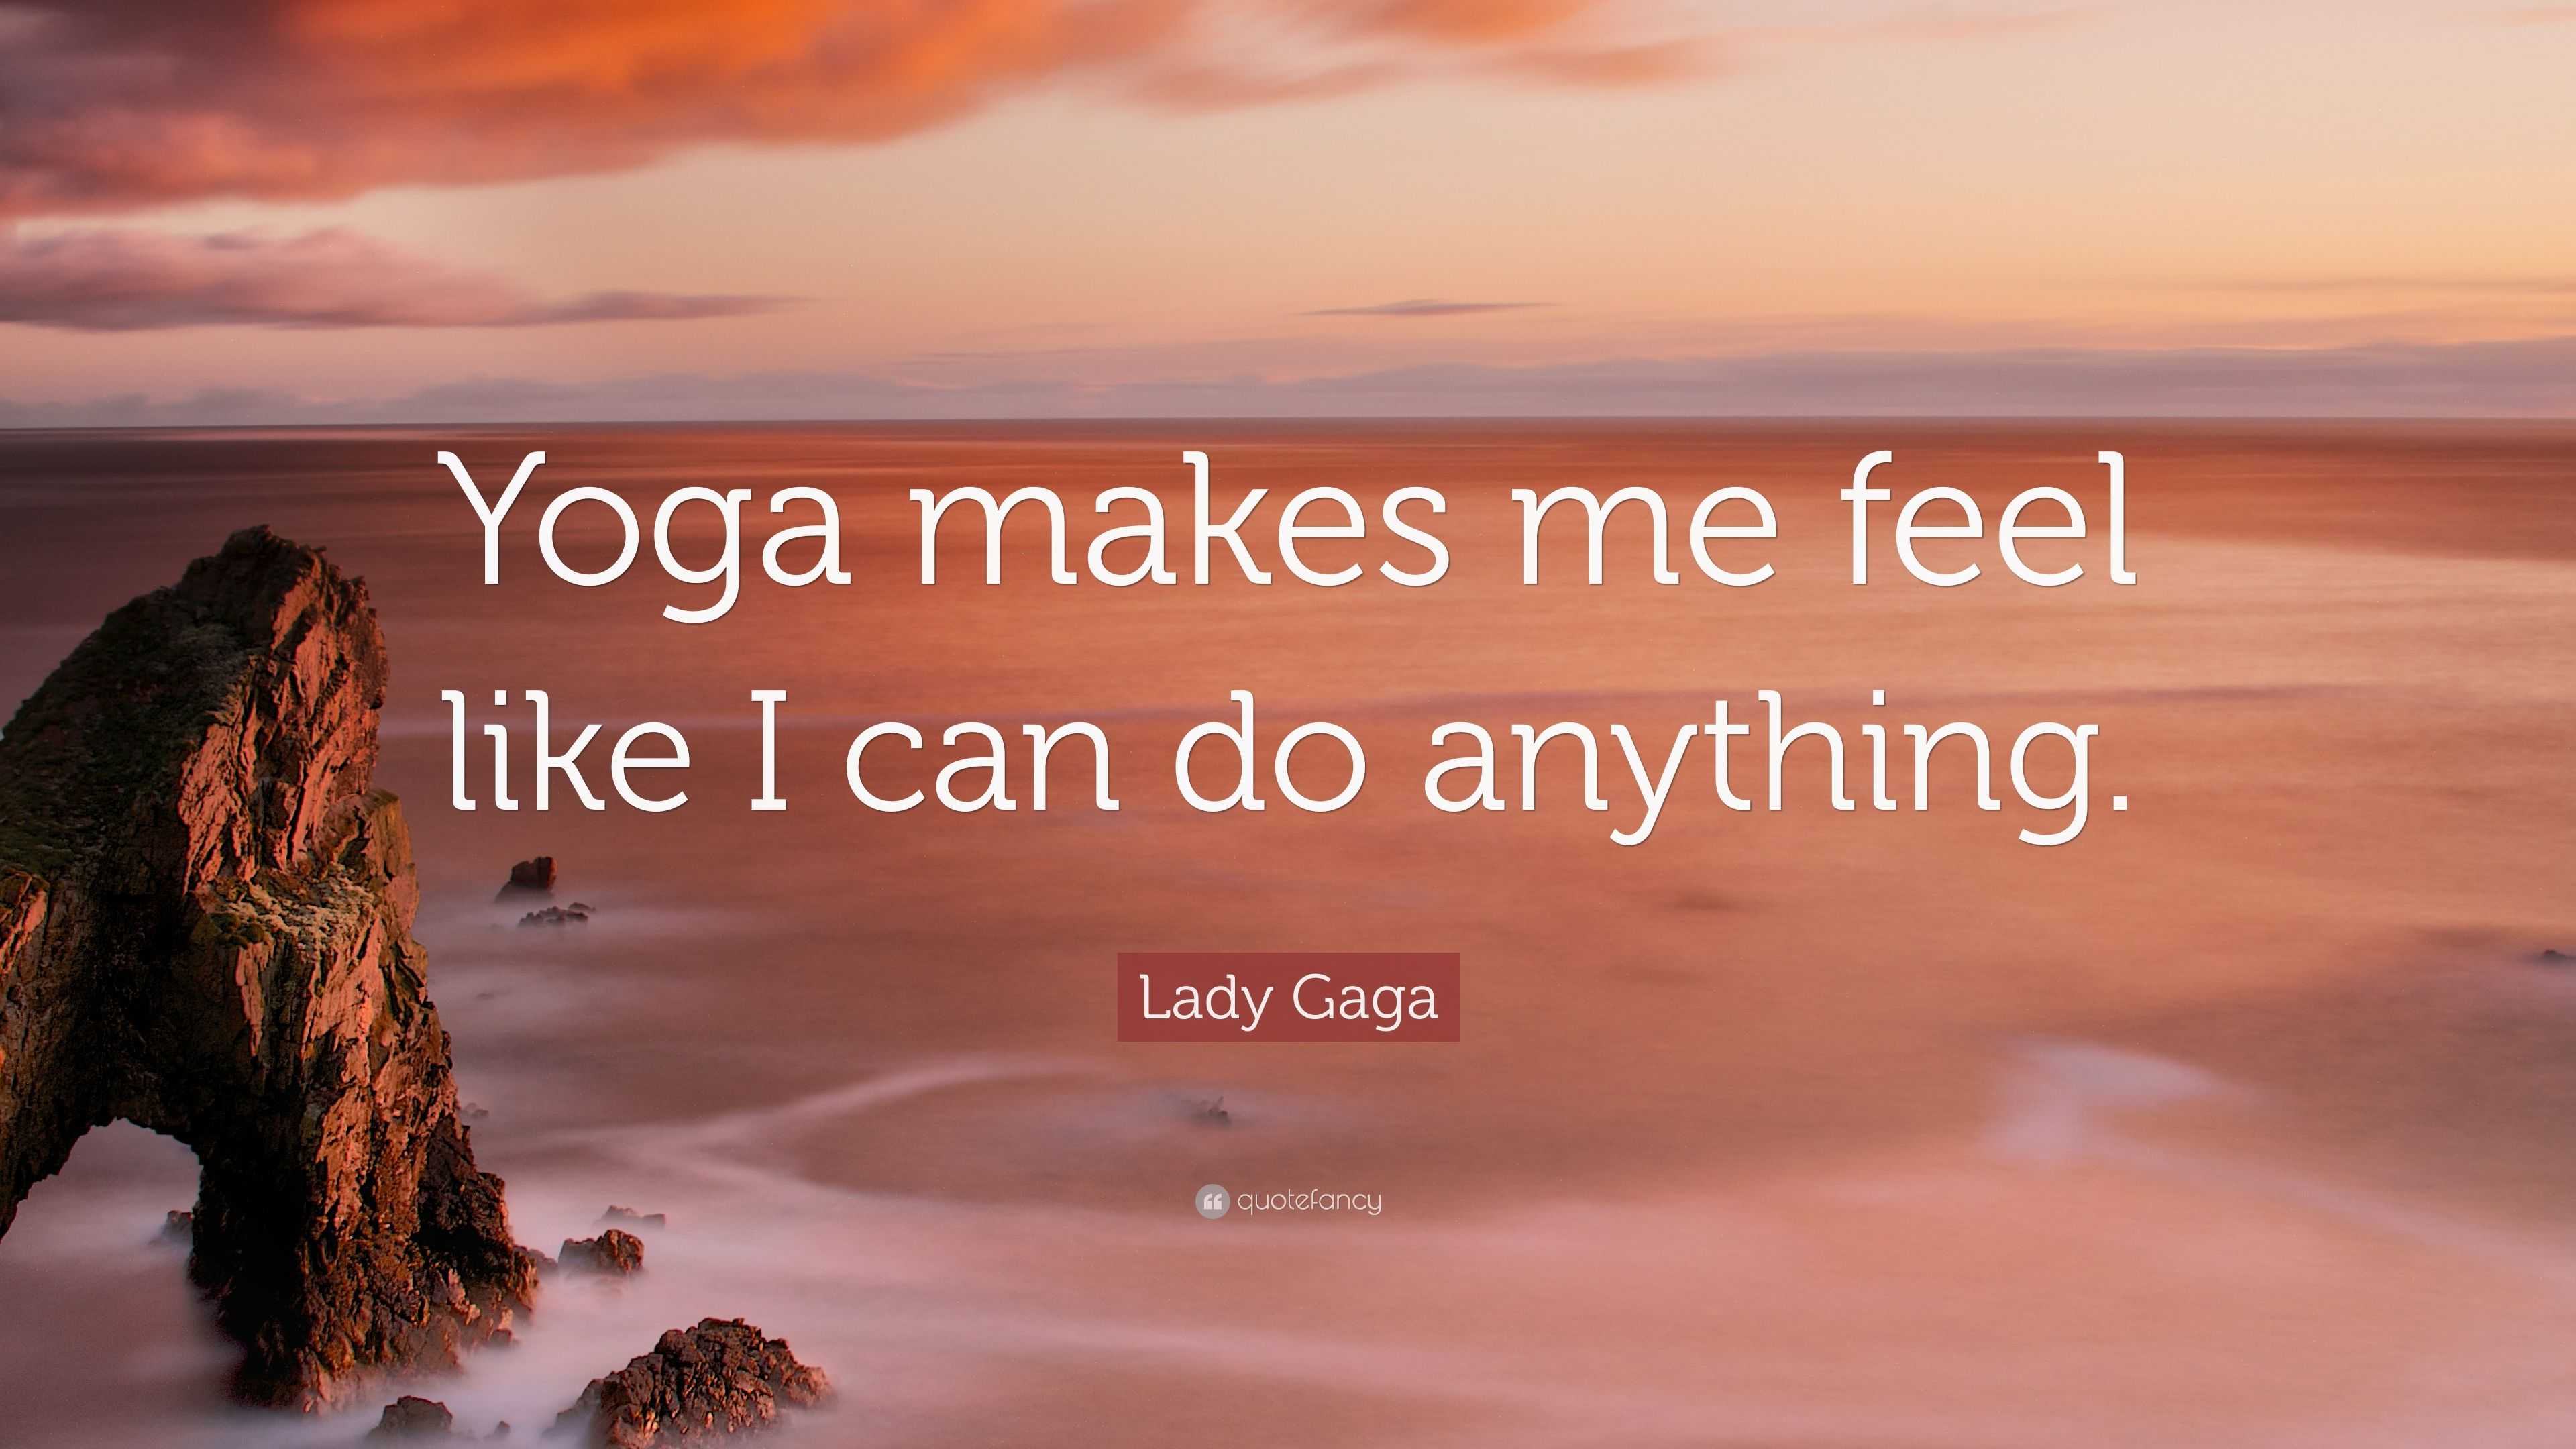 Gaga for Yoga